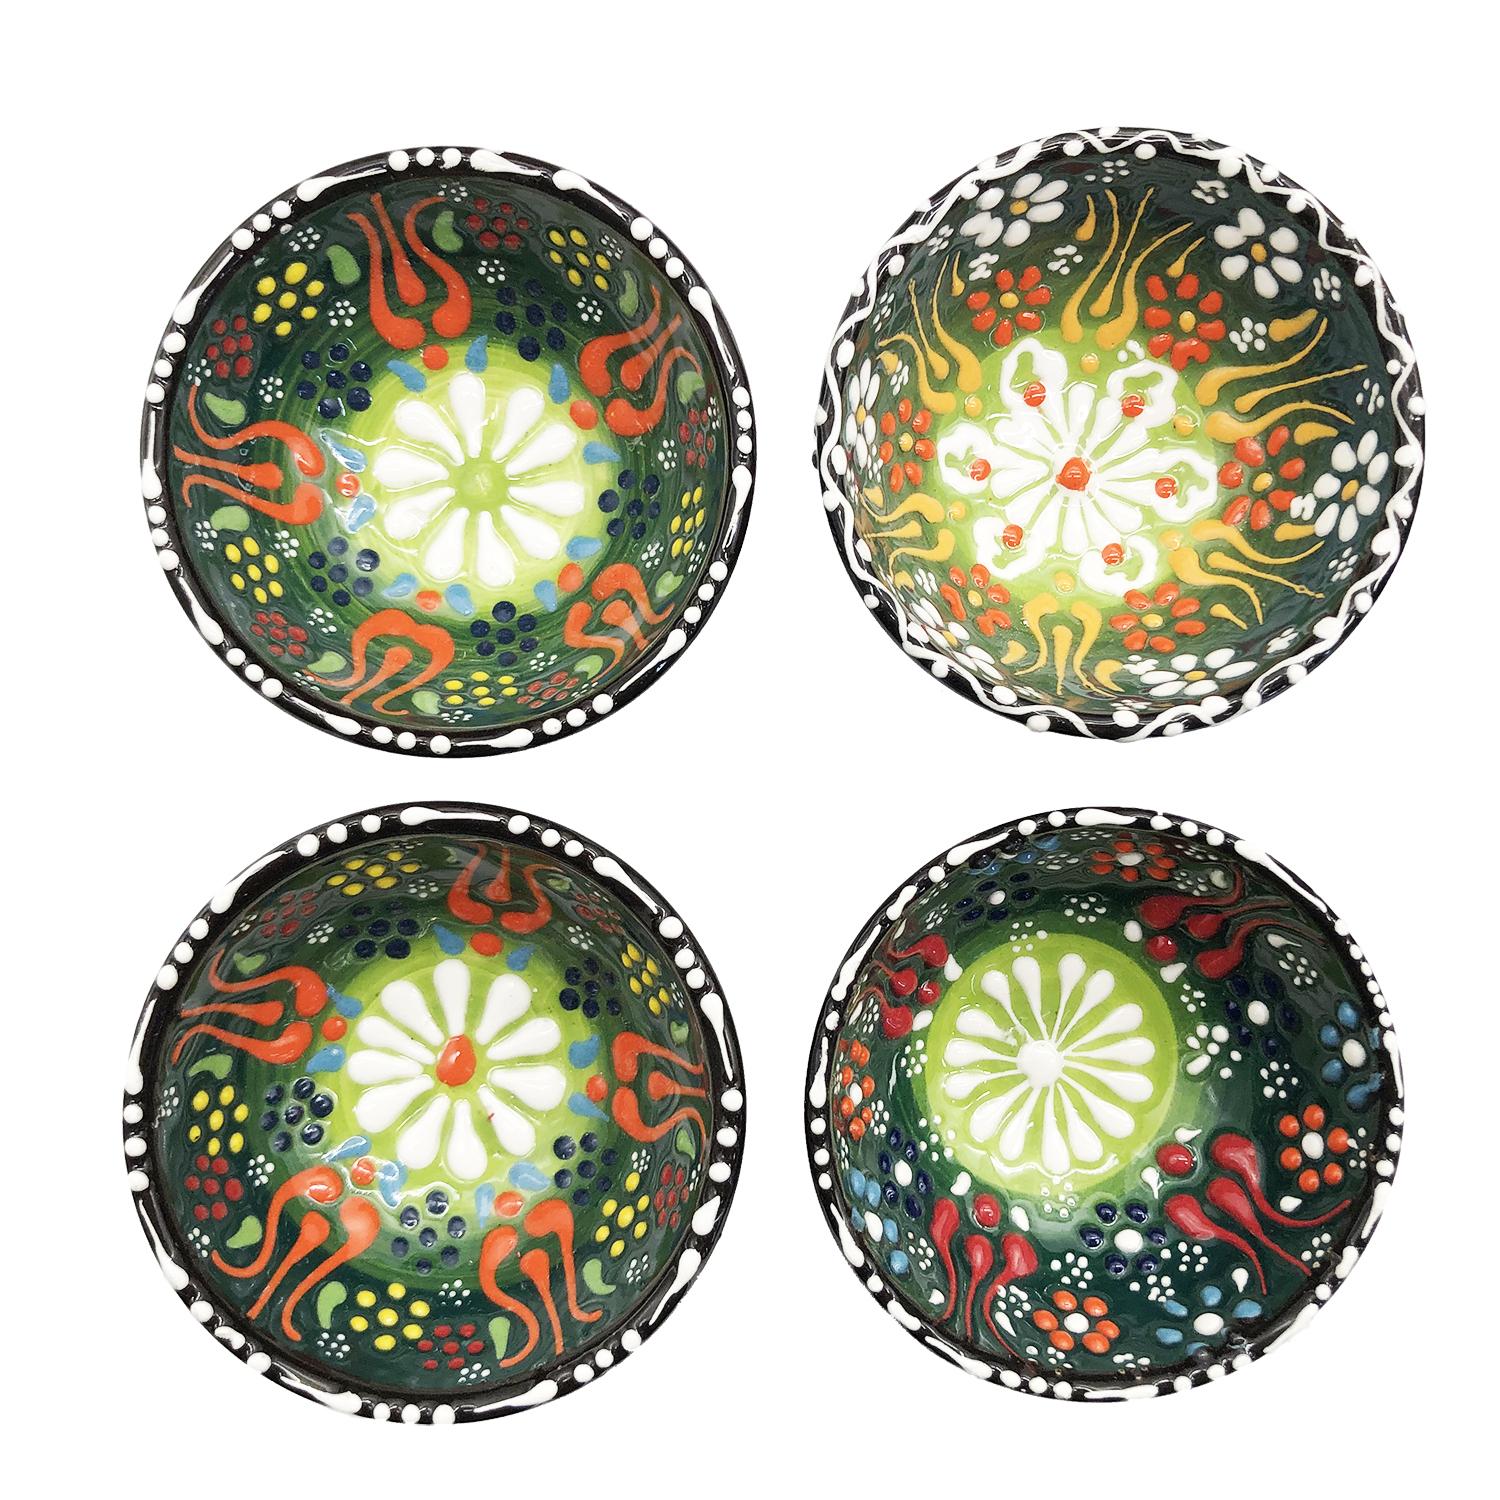 80MM手繪土耳其傳統工藝陶瓷碗， 土耳其餐具奧斯曼帝國浮雕圖案土耳其藝術時尚潮物(VTR-CERAMIC-BOWL-80MM-30001)